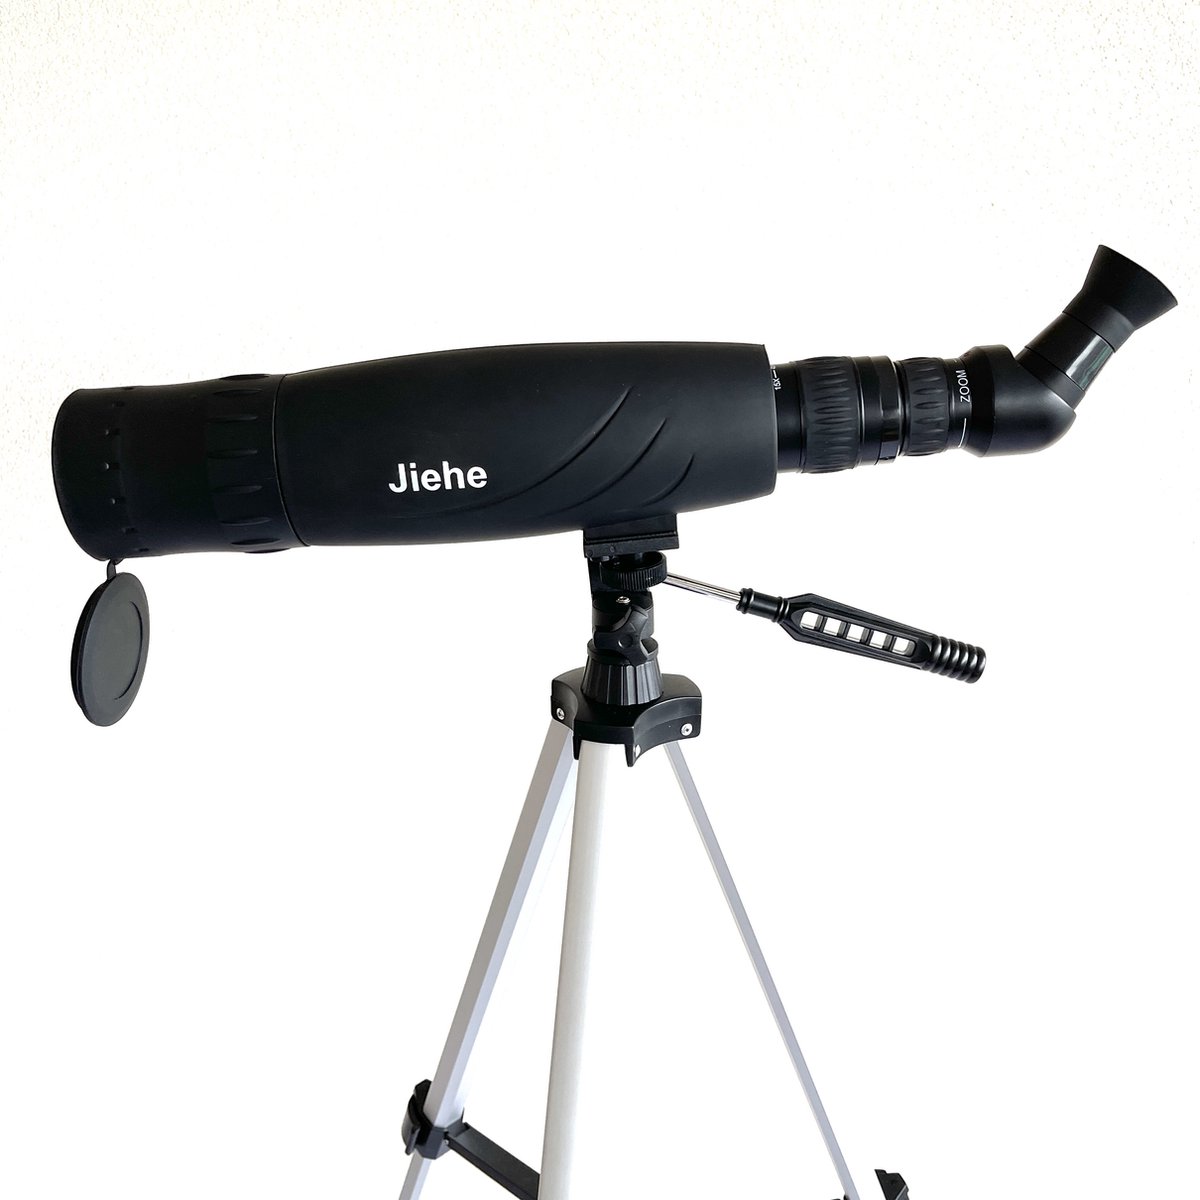 Jiehe 15-45x60mm Spotting scope - Monokijker - Verrekijker - Monoculair verrekijker - Maximale vergroting 45x - Telescoop - Zwart - Incl. statief